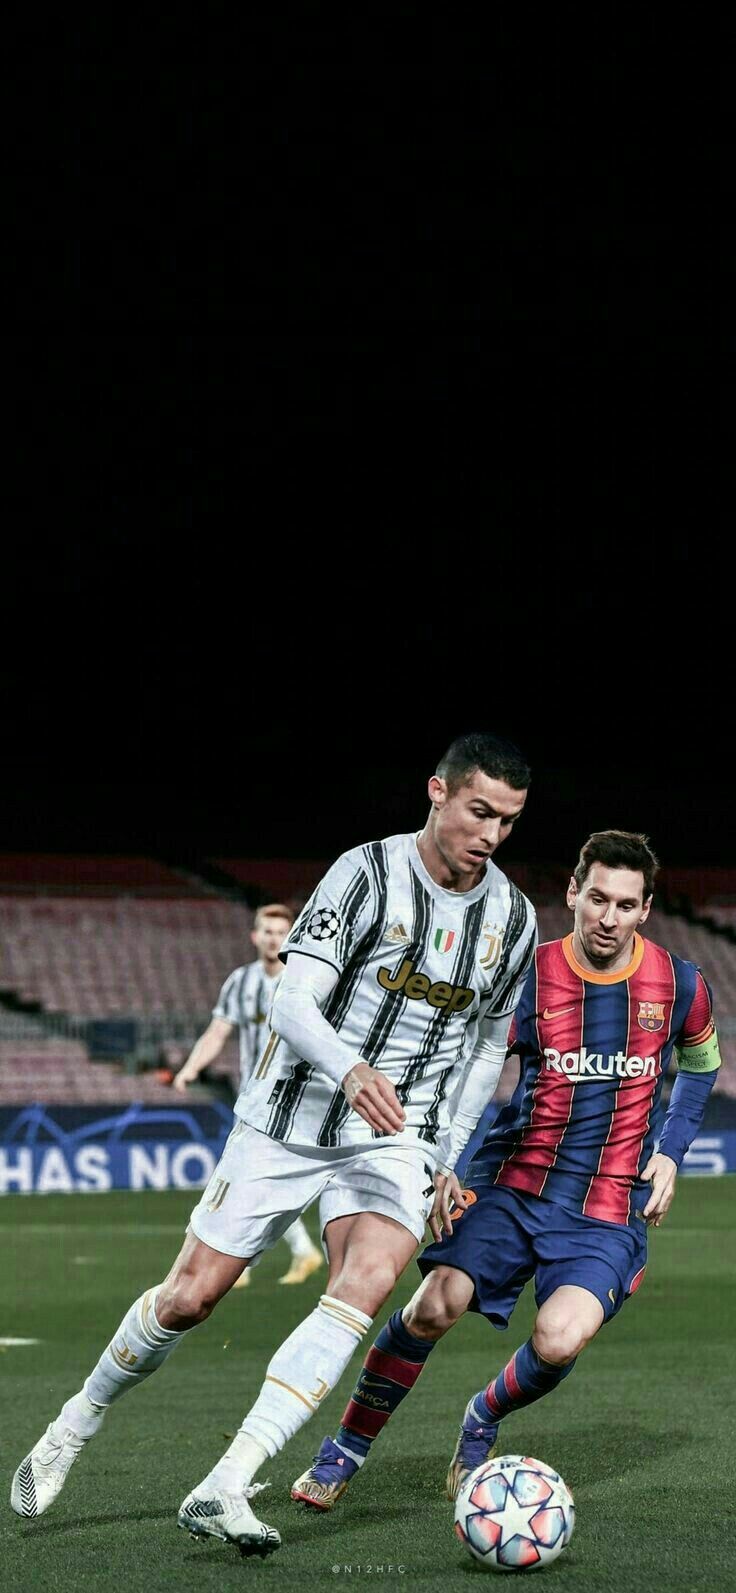 C.Ronaldo & L.Messi Together. Messi vs ronaldo, Messi and ronaldo wallpaper, Messi and ronaldo